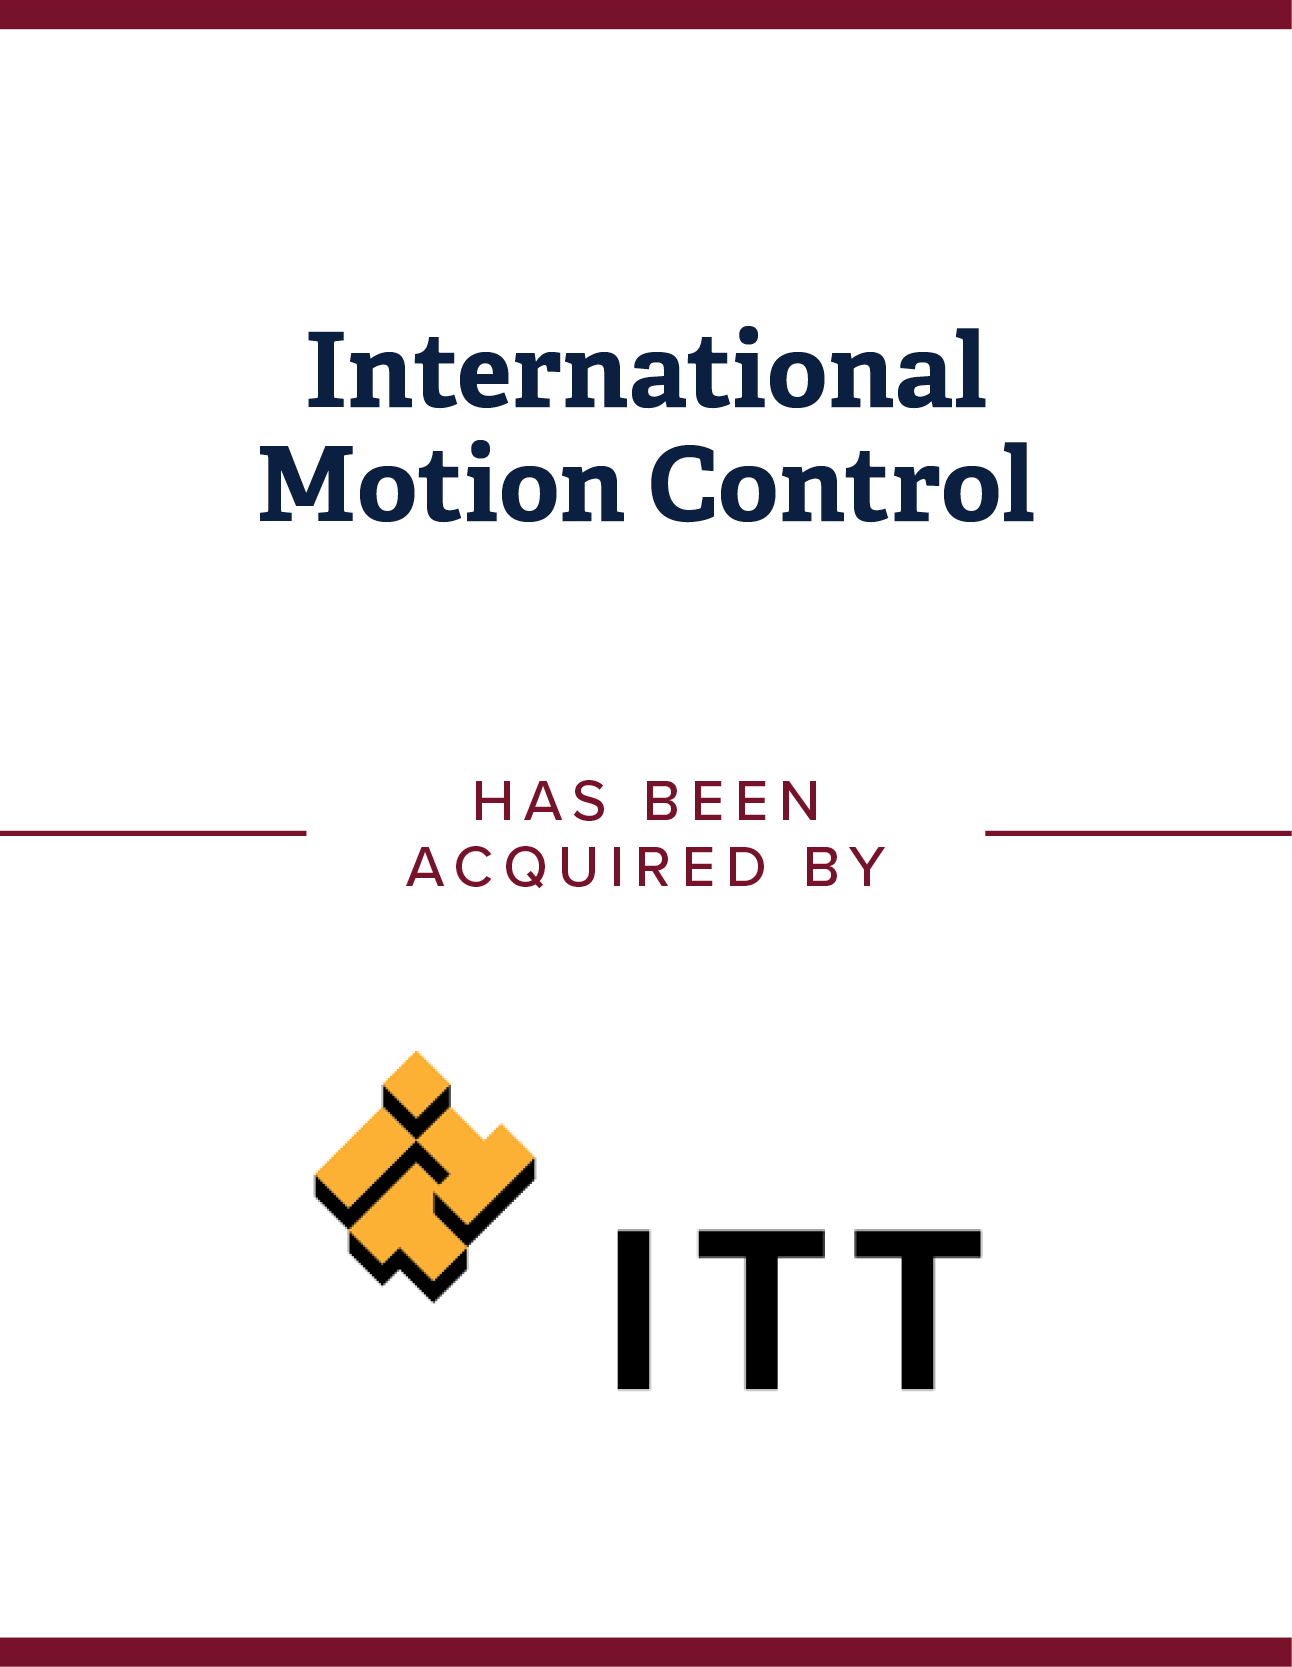 International Motion Control Transaction Tombstone